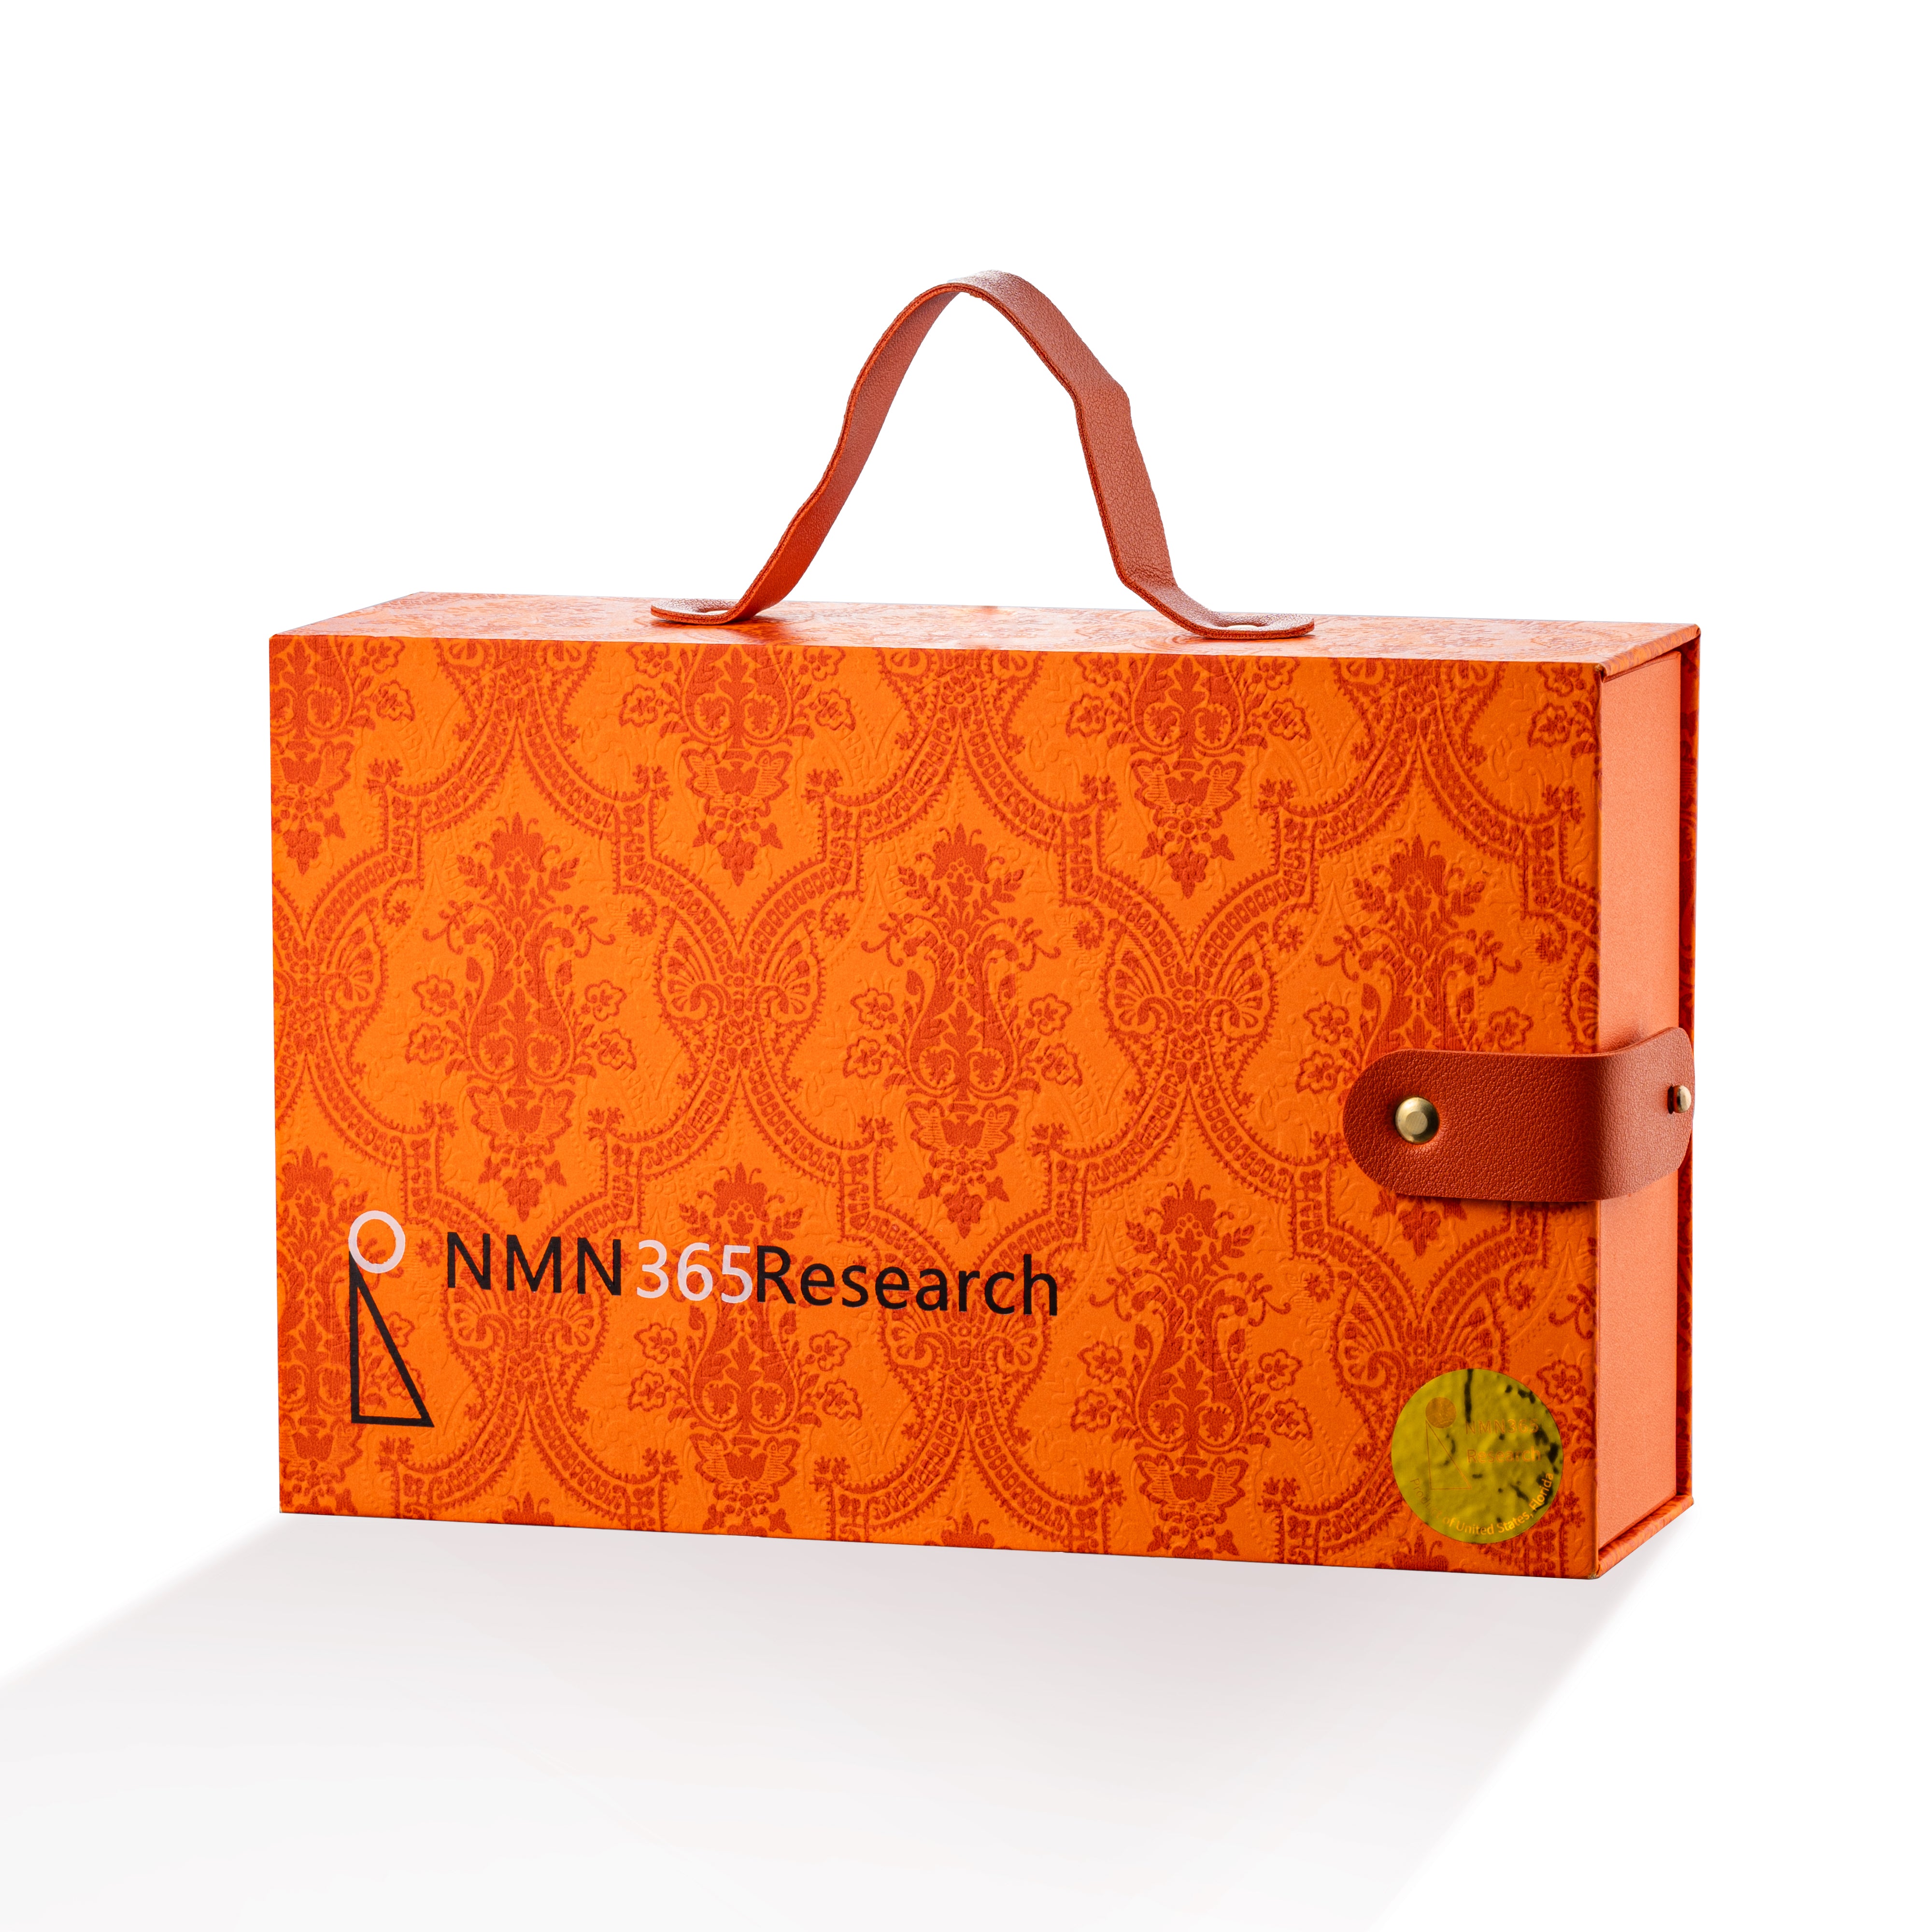 NMN365Research USA 45000 Orange Box (Gift Pack 15000 x 3 bottles)